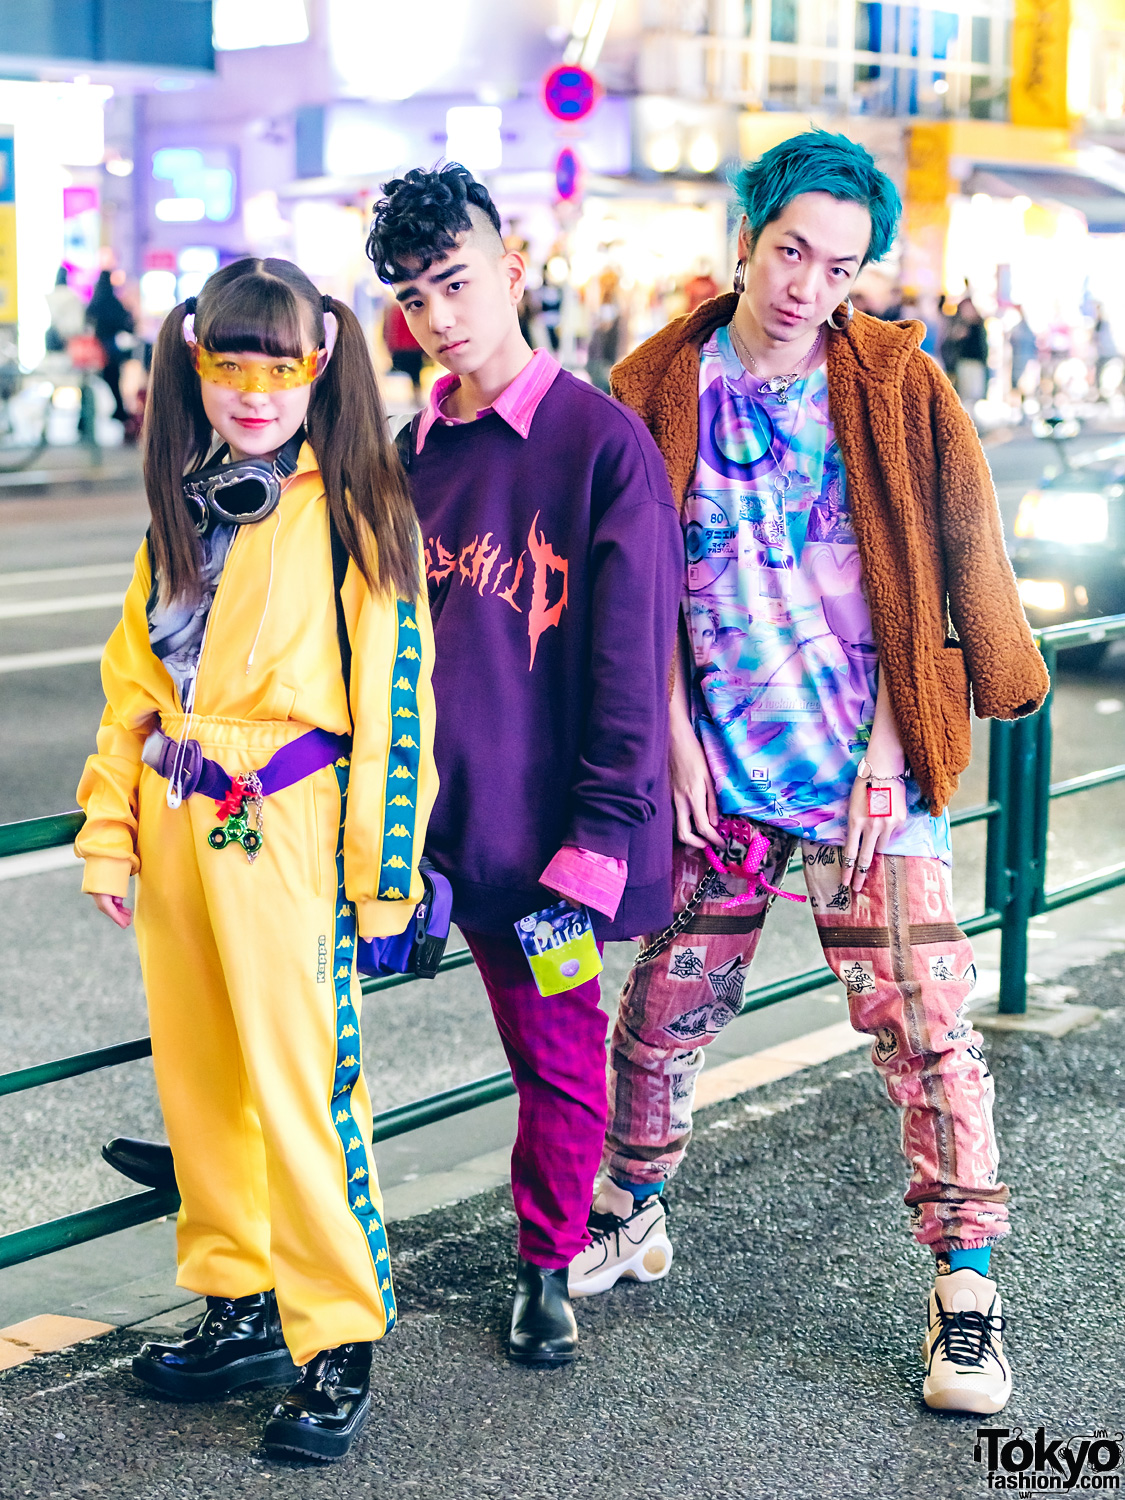 Japanese Teen Trio in Fun & Colorful Streetwear Styles